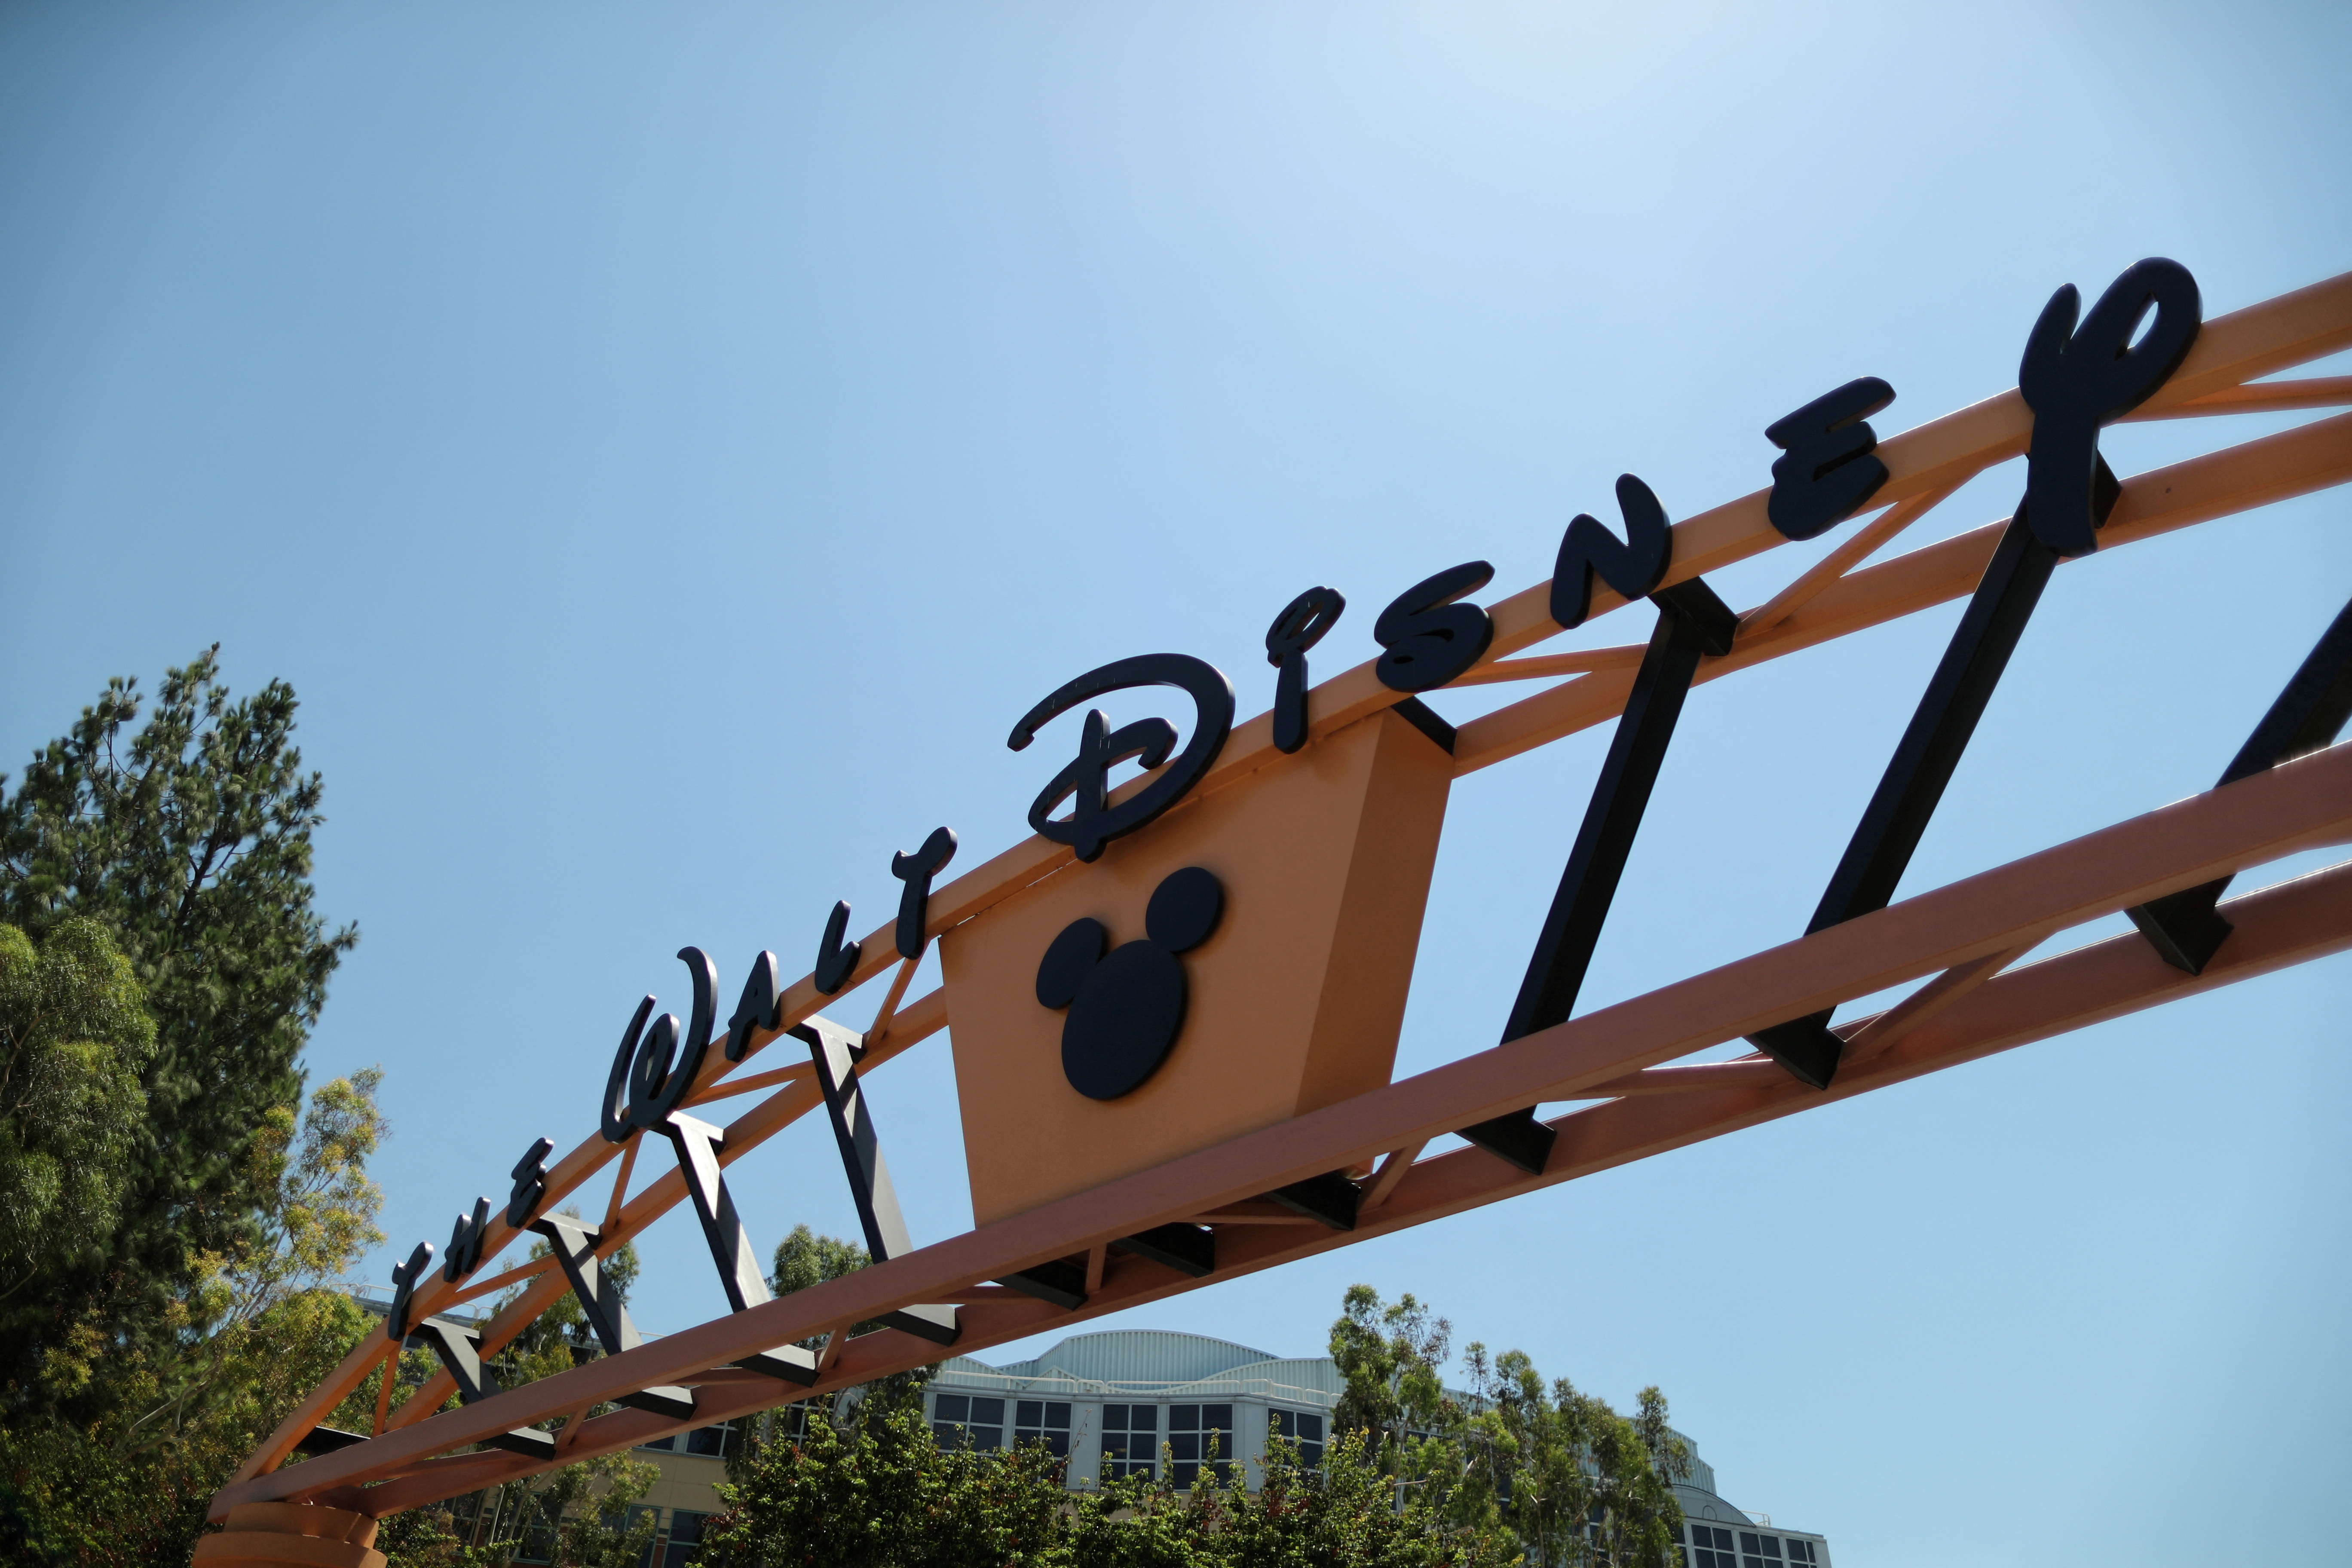 The entrance to Walt Disney studios is seen in Burbank